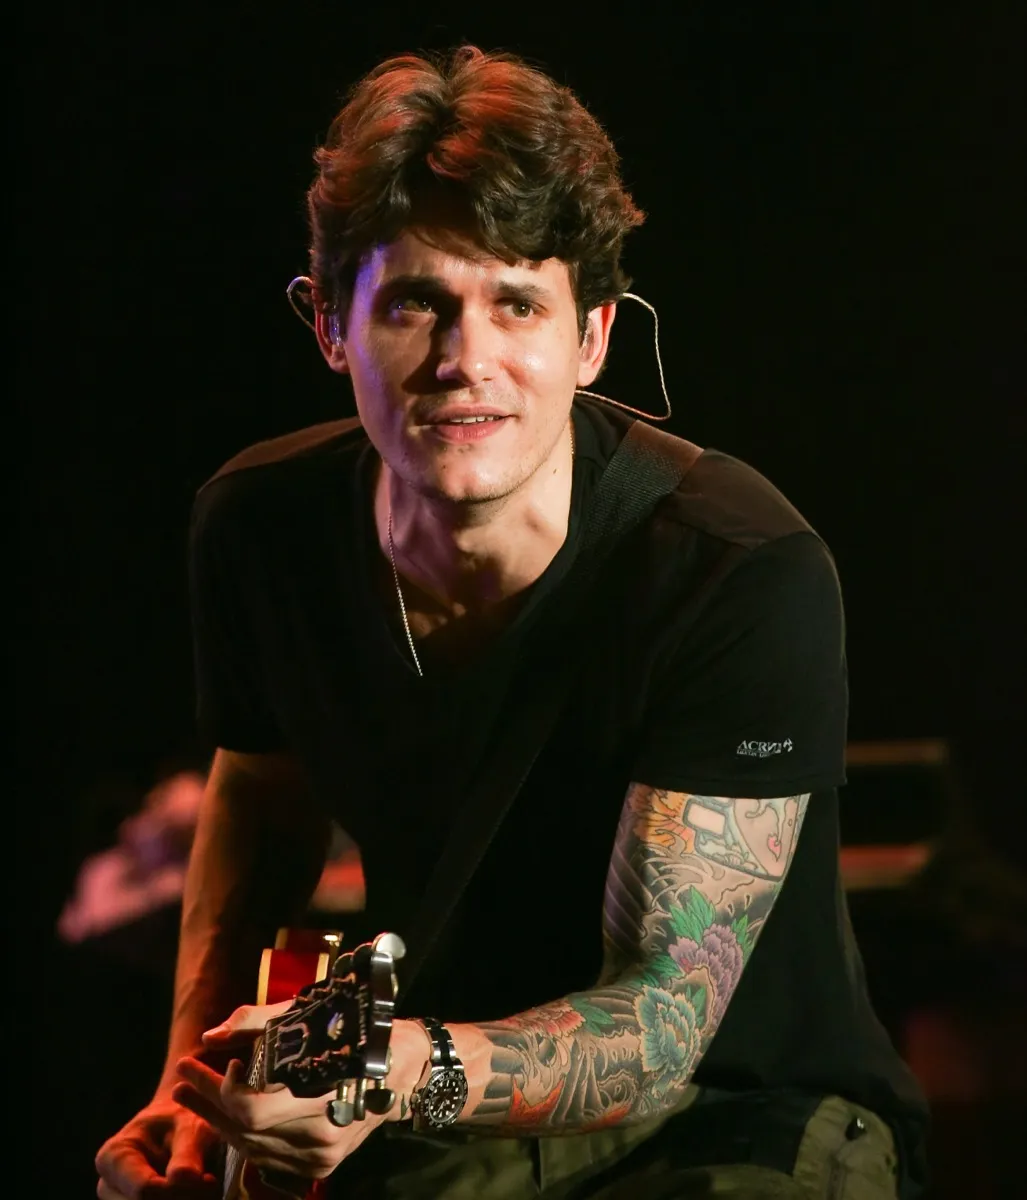 John Mayer in 2010